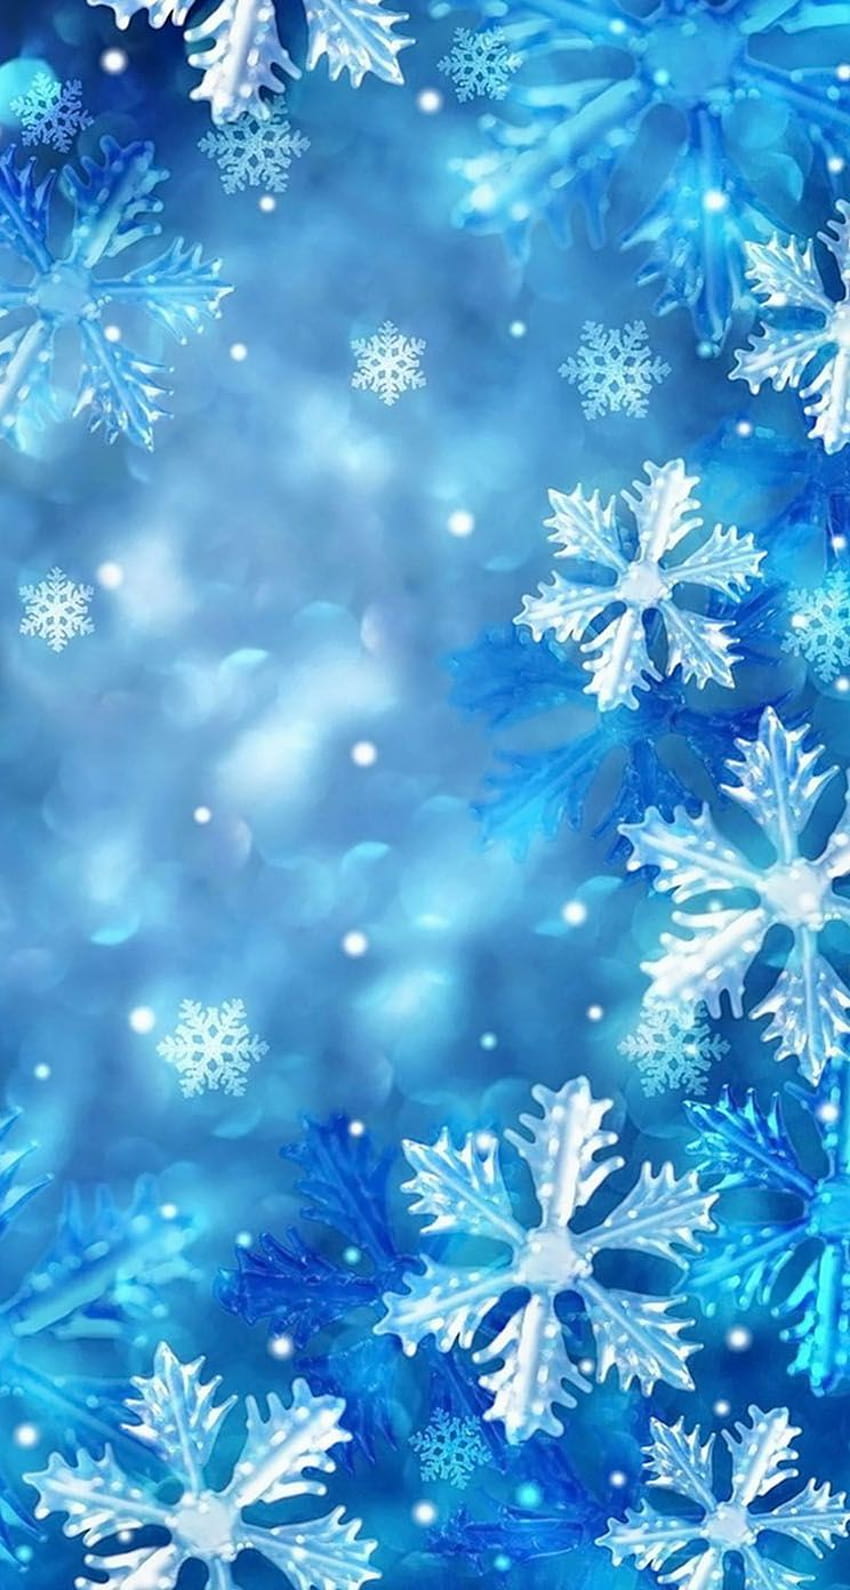 Snowflake on Dog, iphone musim dingin yang lucu wallpaper ponsel HD